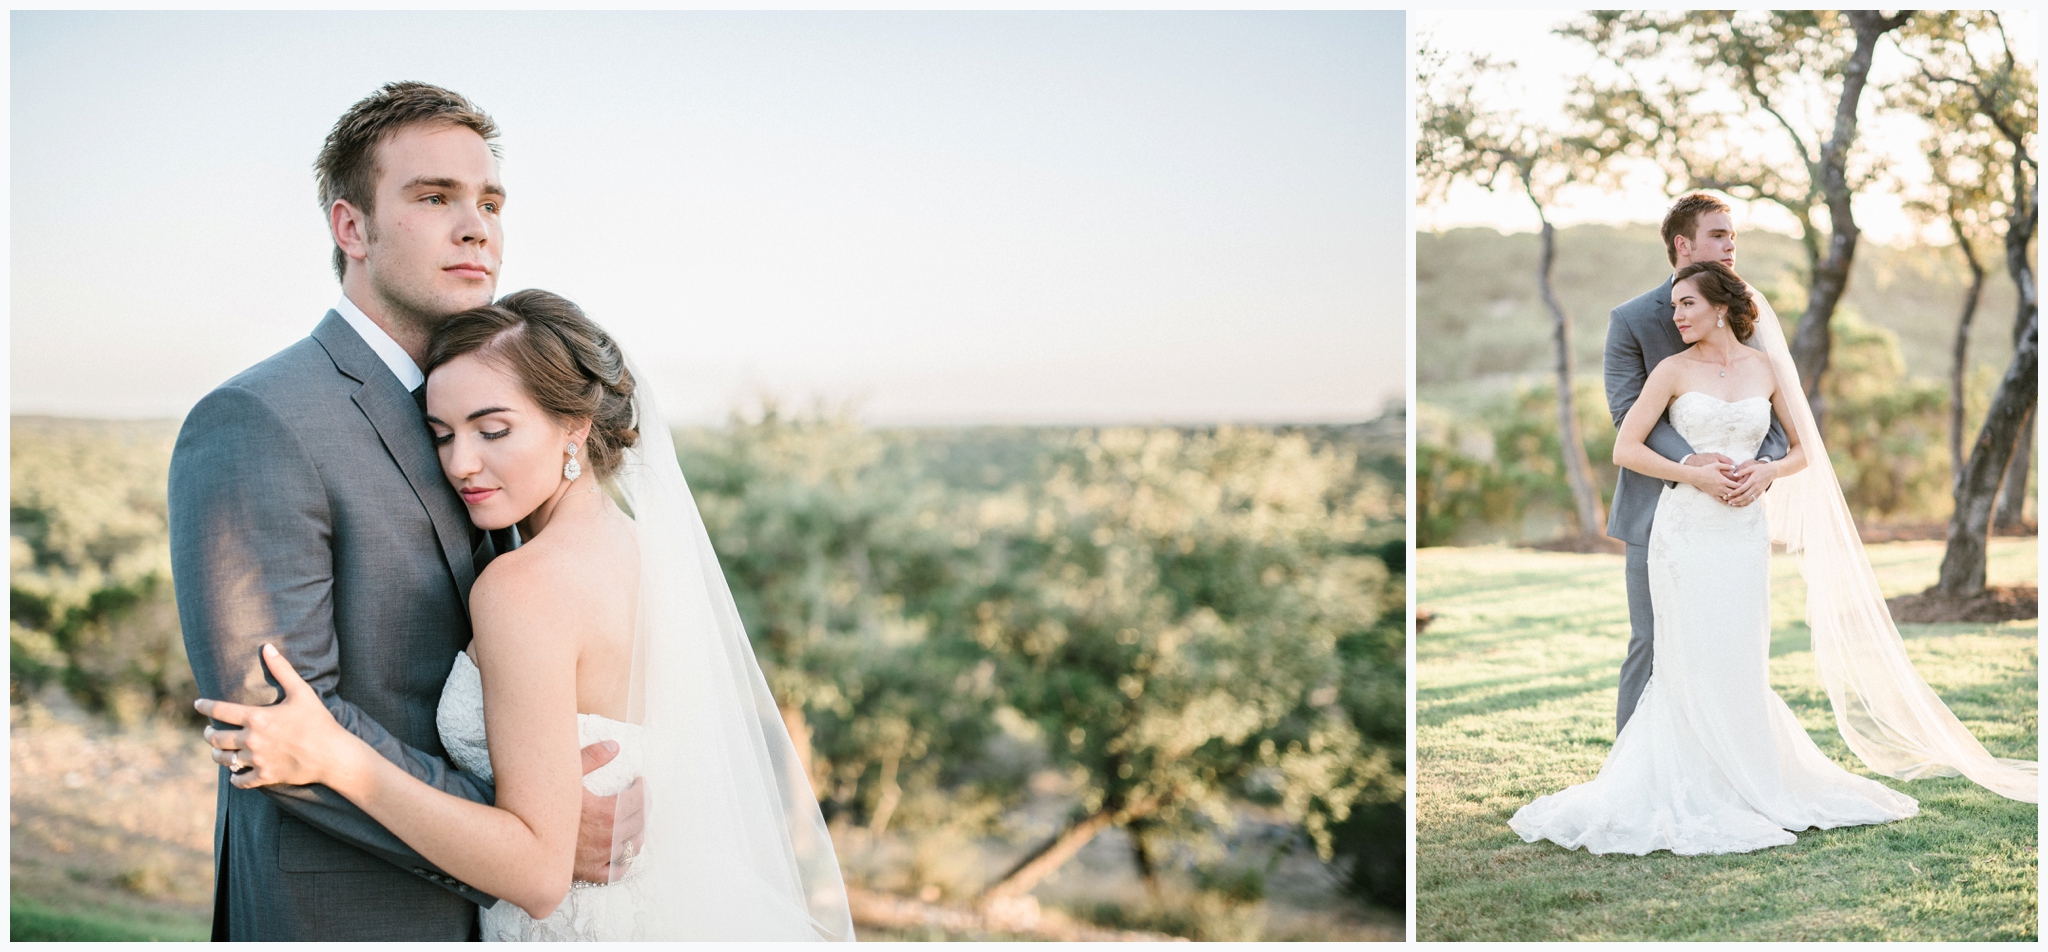 joslyn-holtfort-photography-canyonwood-ridge-wedding-austin-texas-29